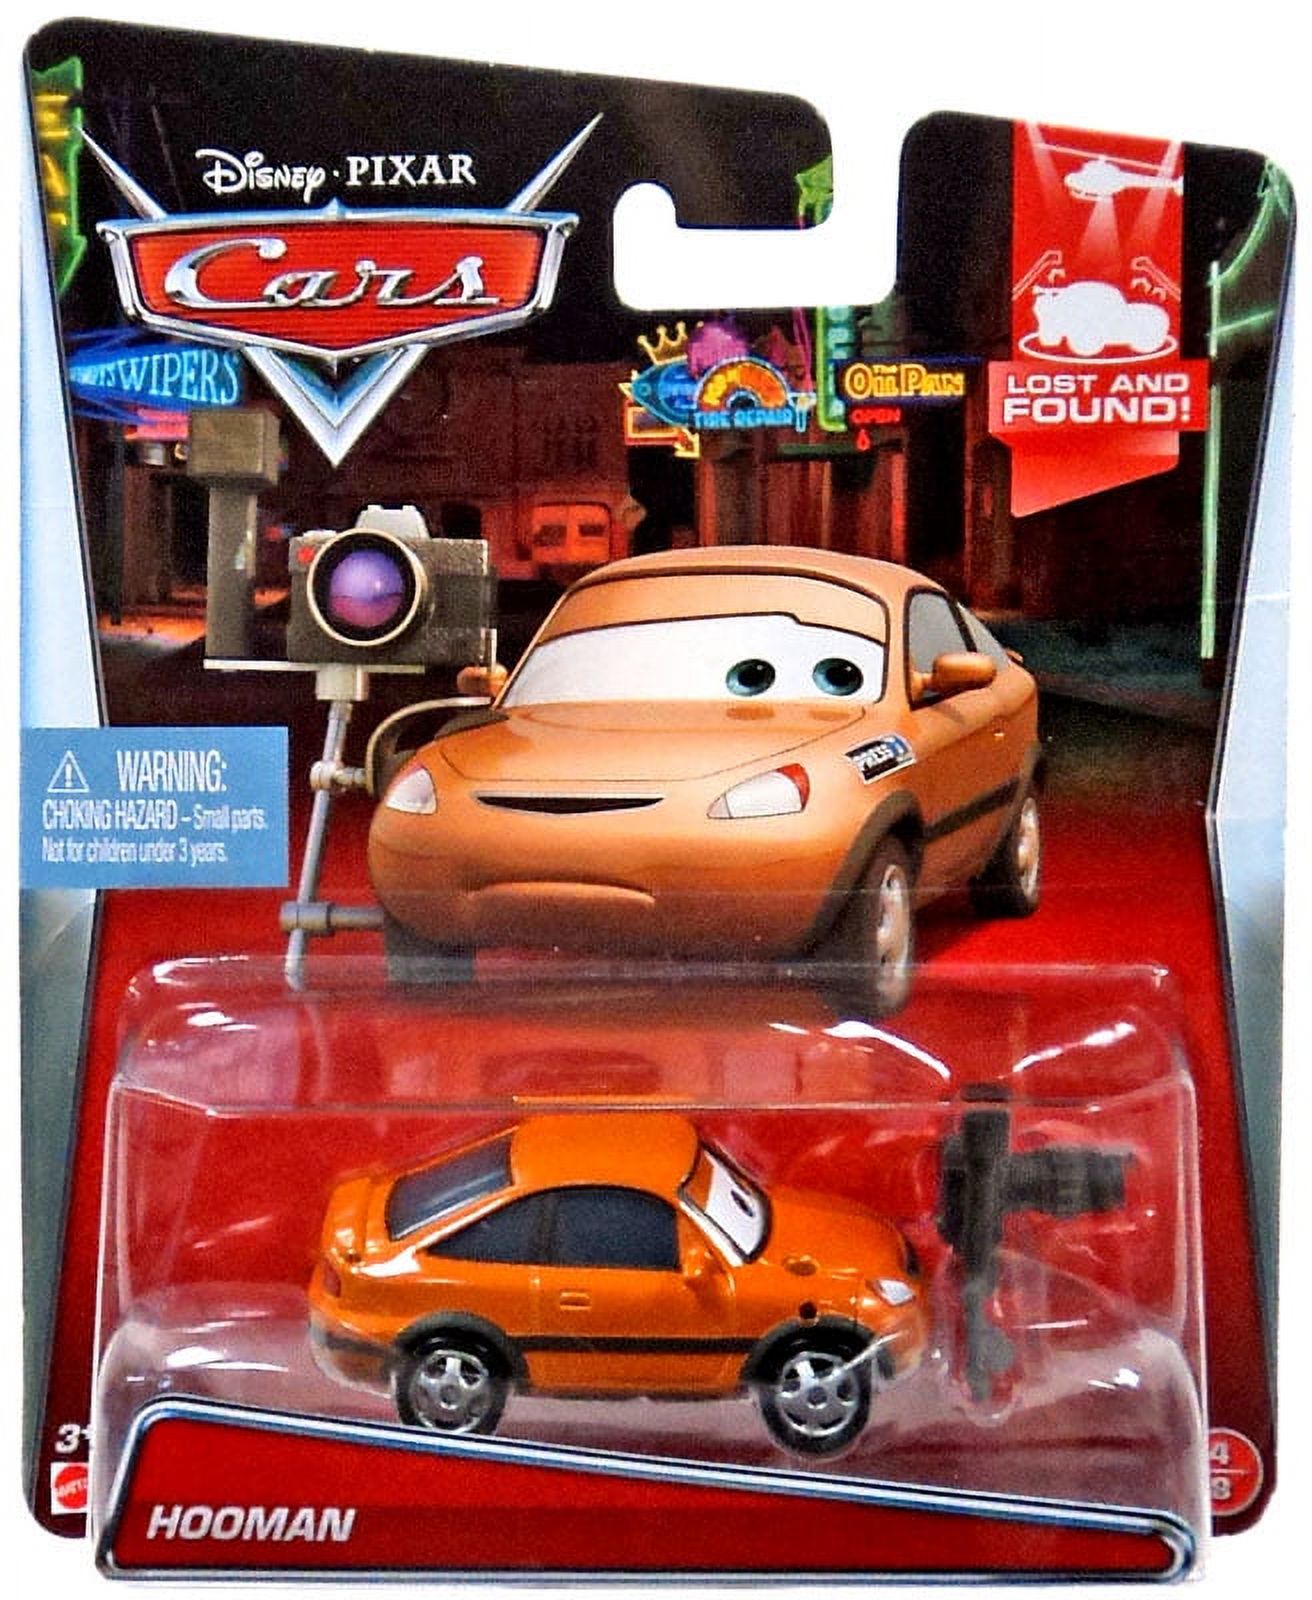 Disney Pixar Cars Natalie Certain - image 1 of 3